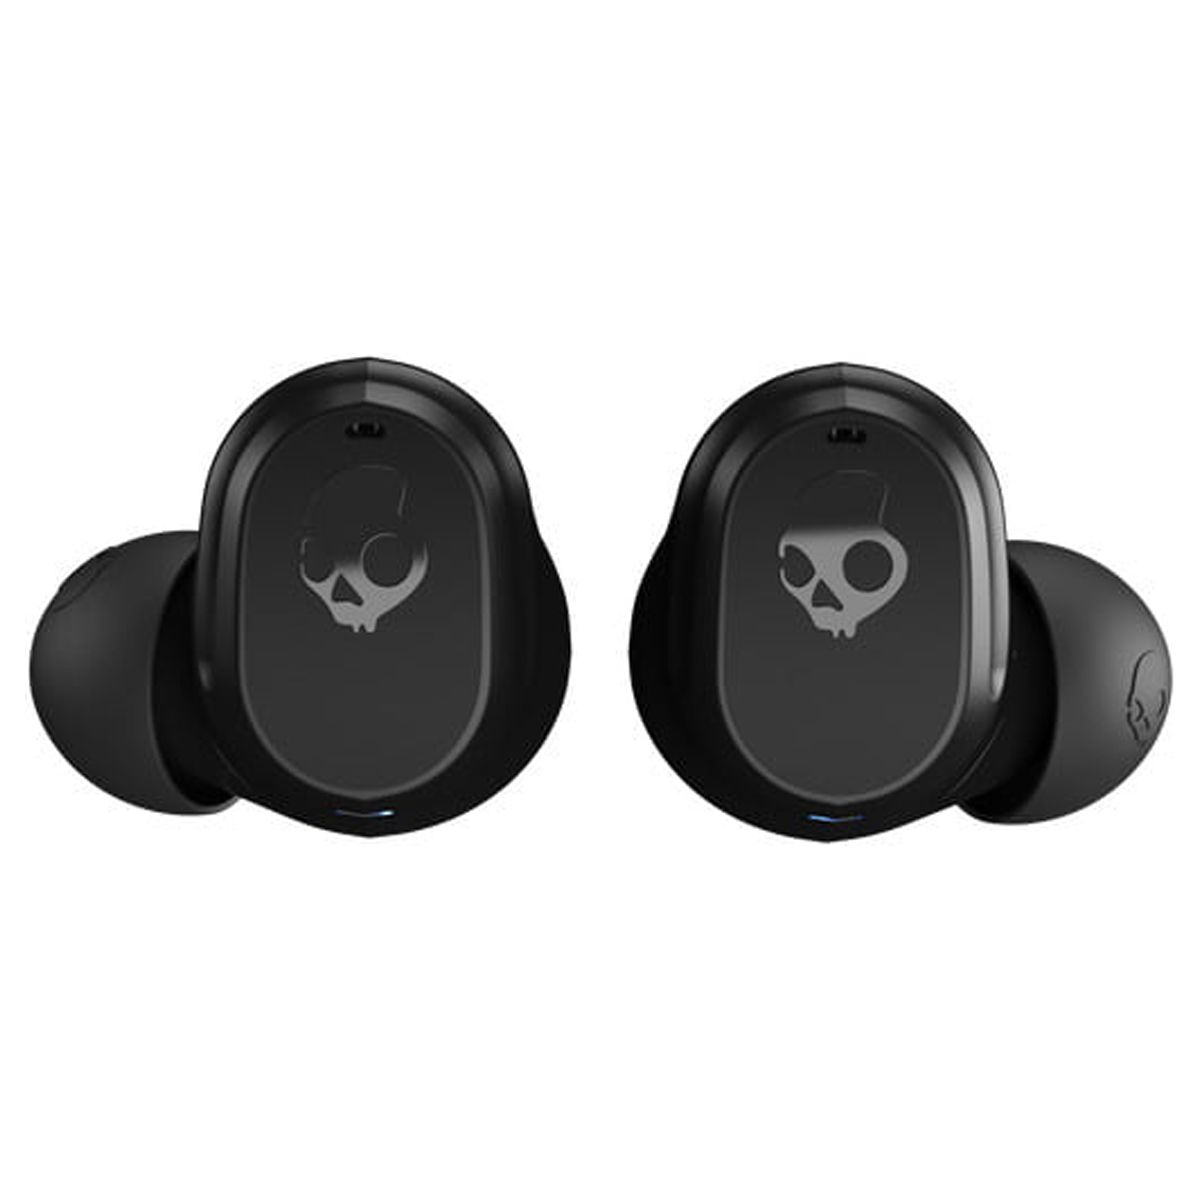 Skullcandy Mod XT True Wireless Earbud Headphones with Microphone, True Black - image 9 of 11